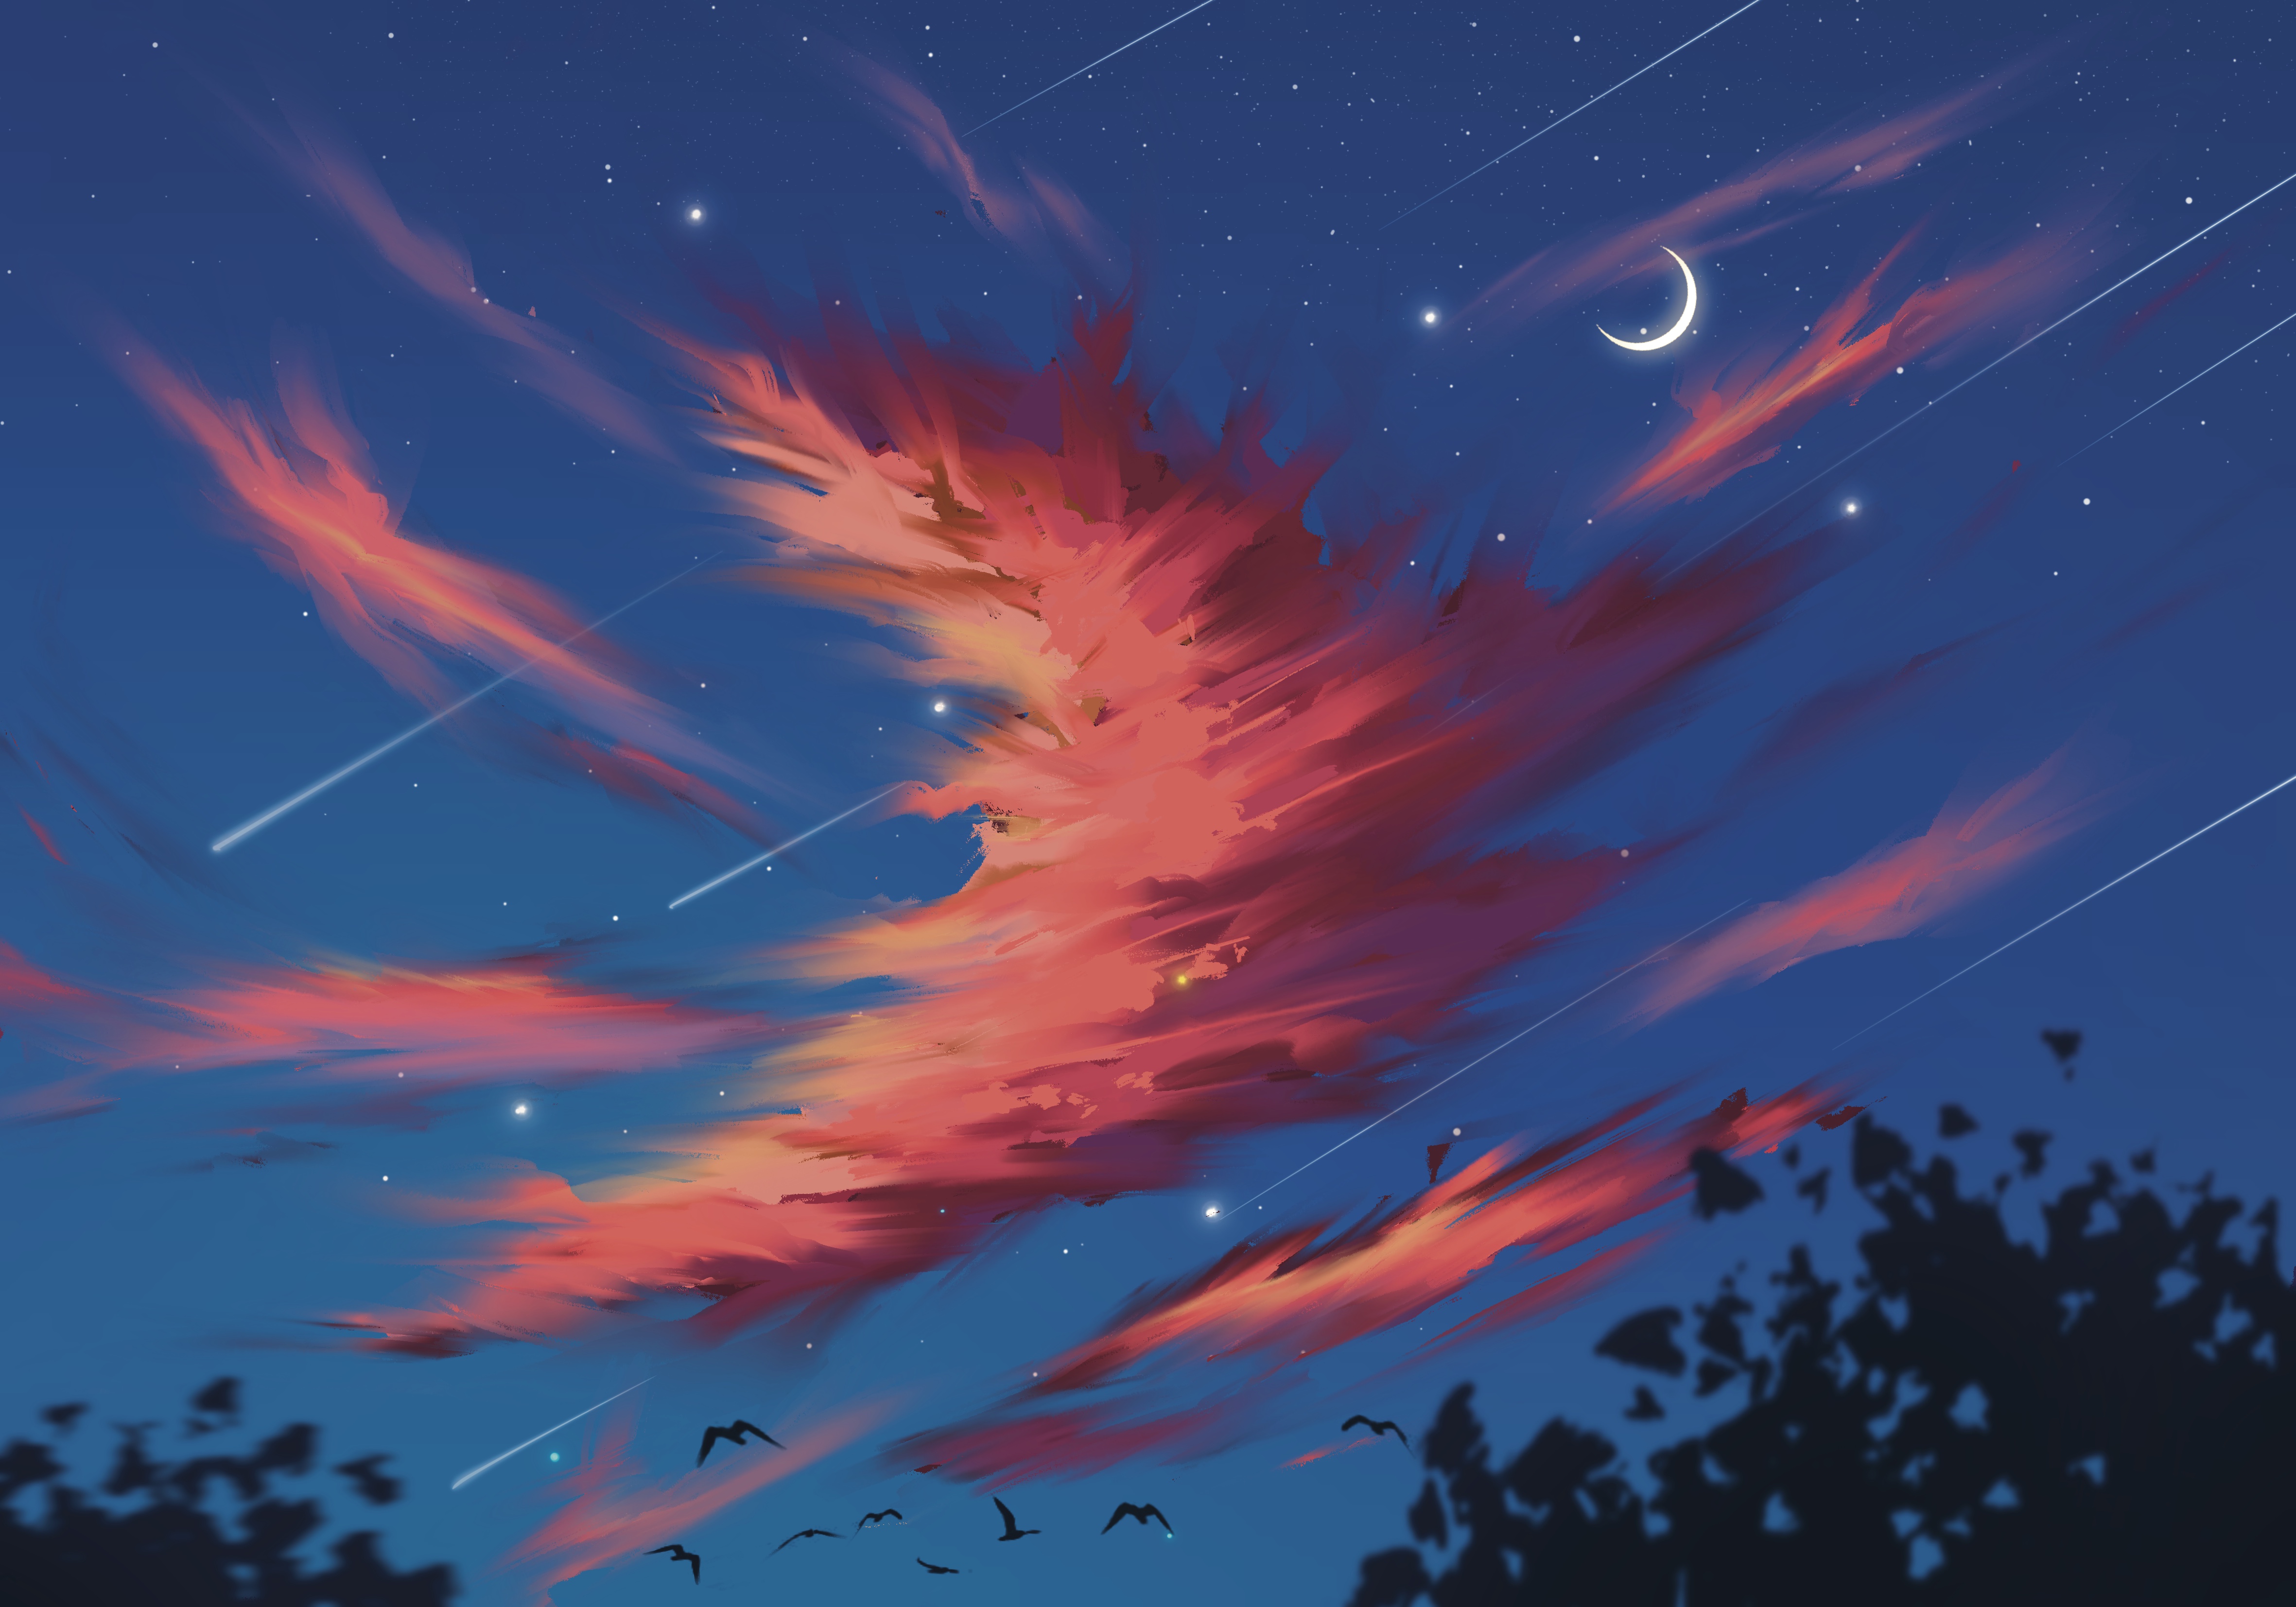 General 4724x3307 digital art artwork illustration painting sky clouds Moon birds animals stars shooting stars